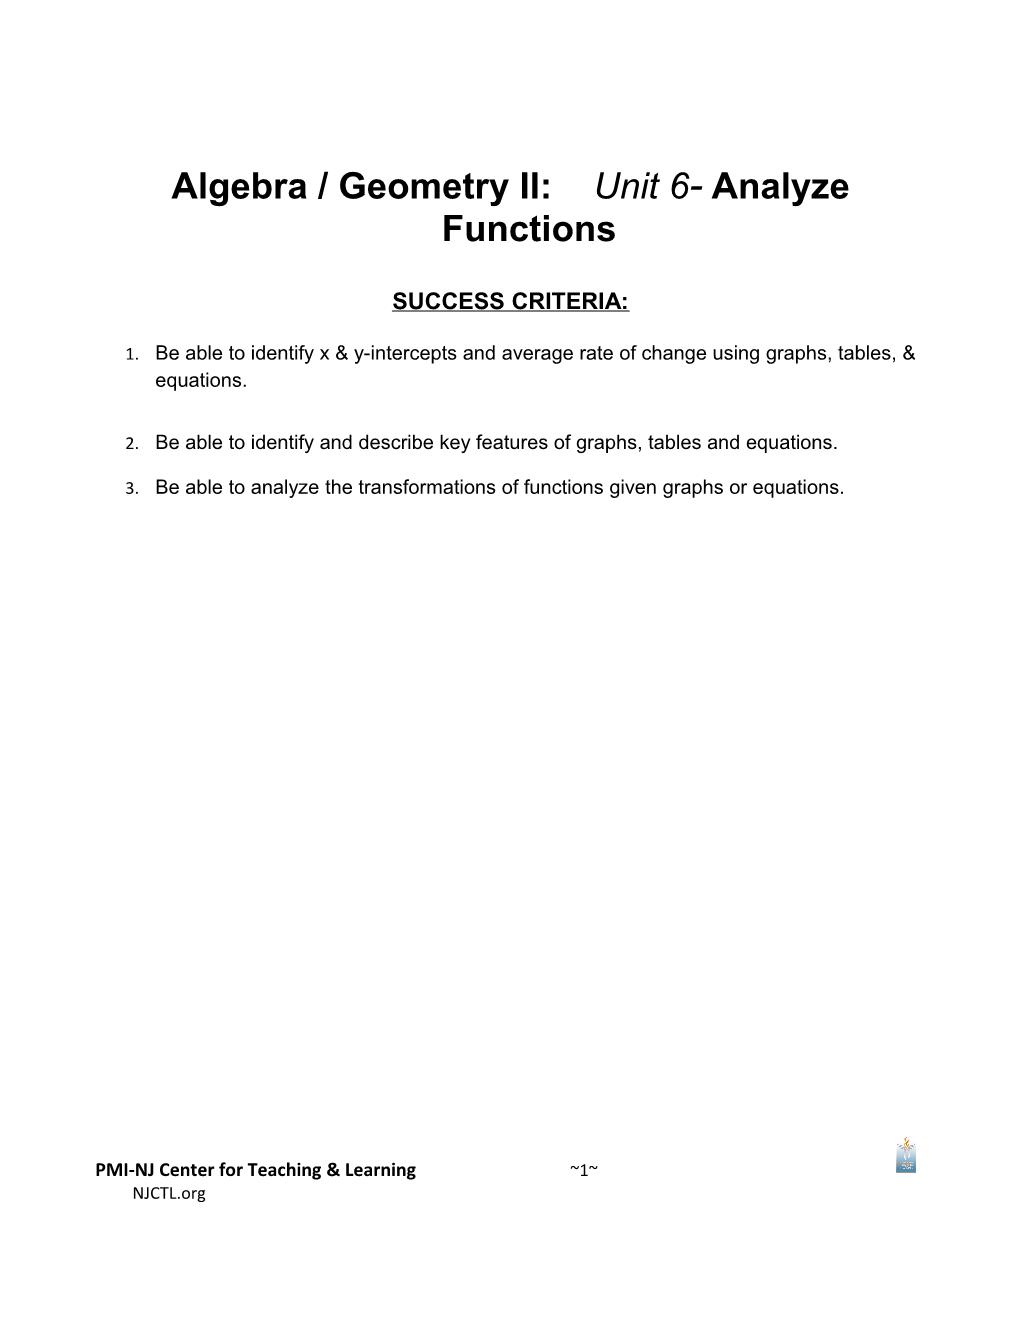 Algebra / Geometry II: Unit 6- Analyze Functions